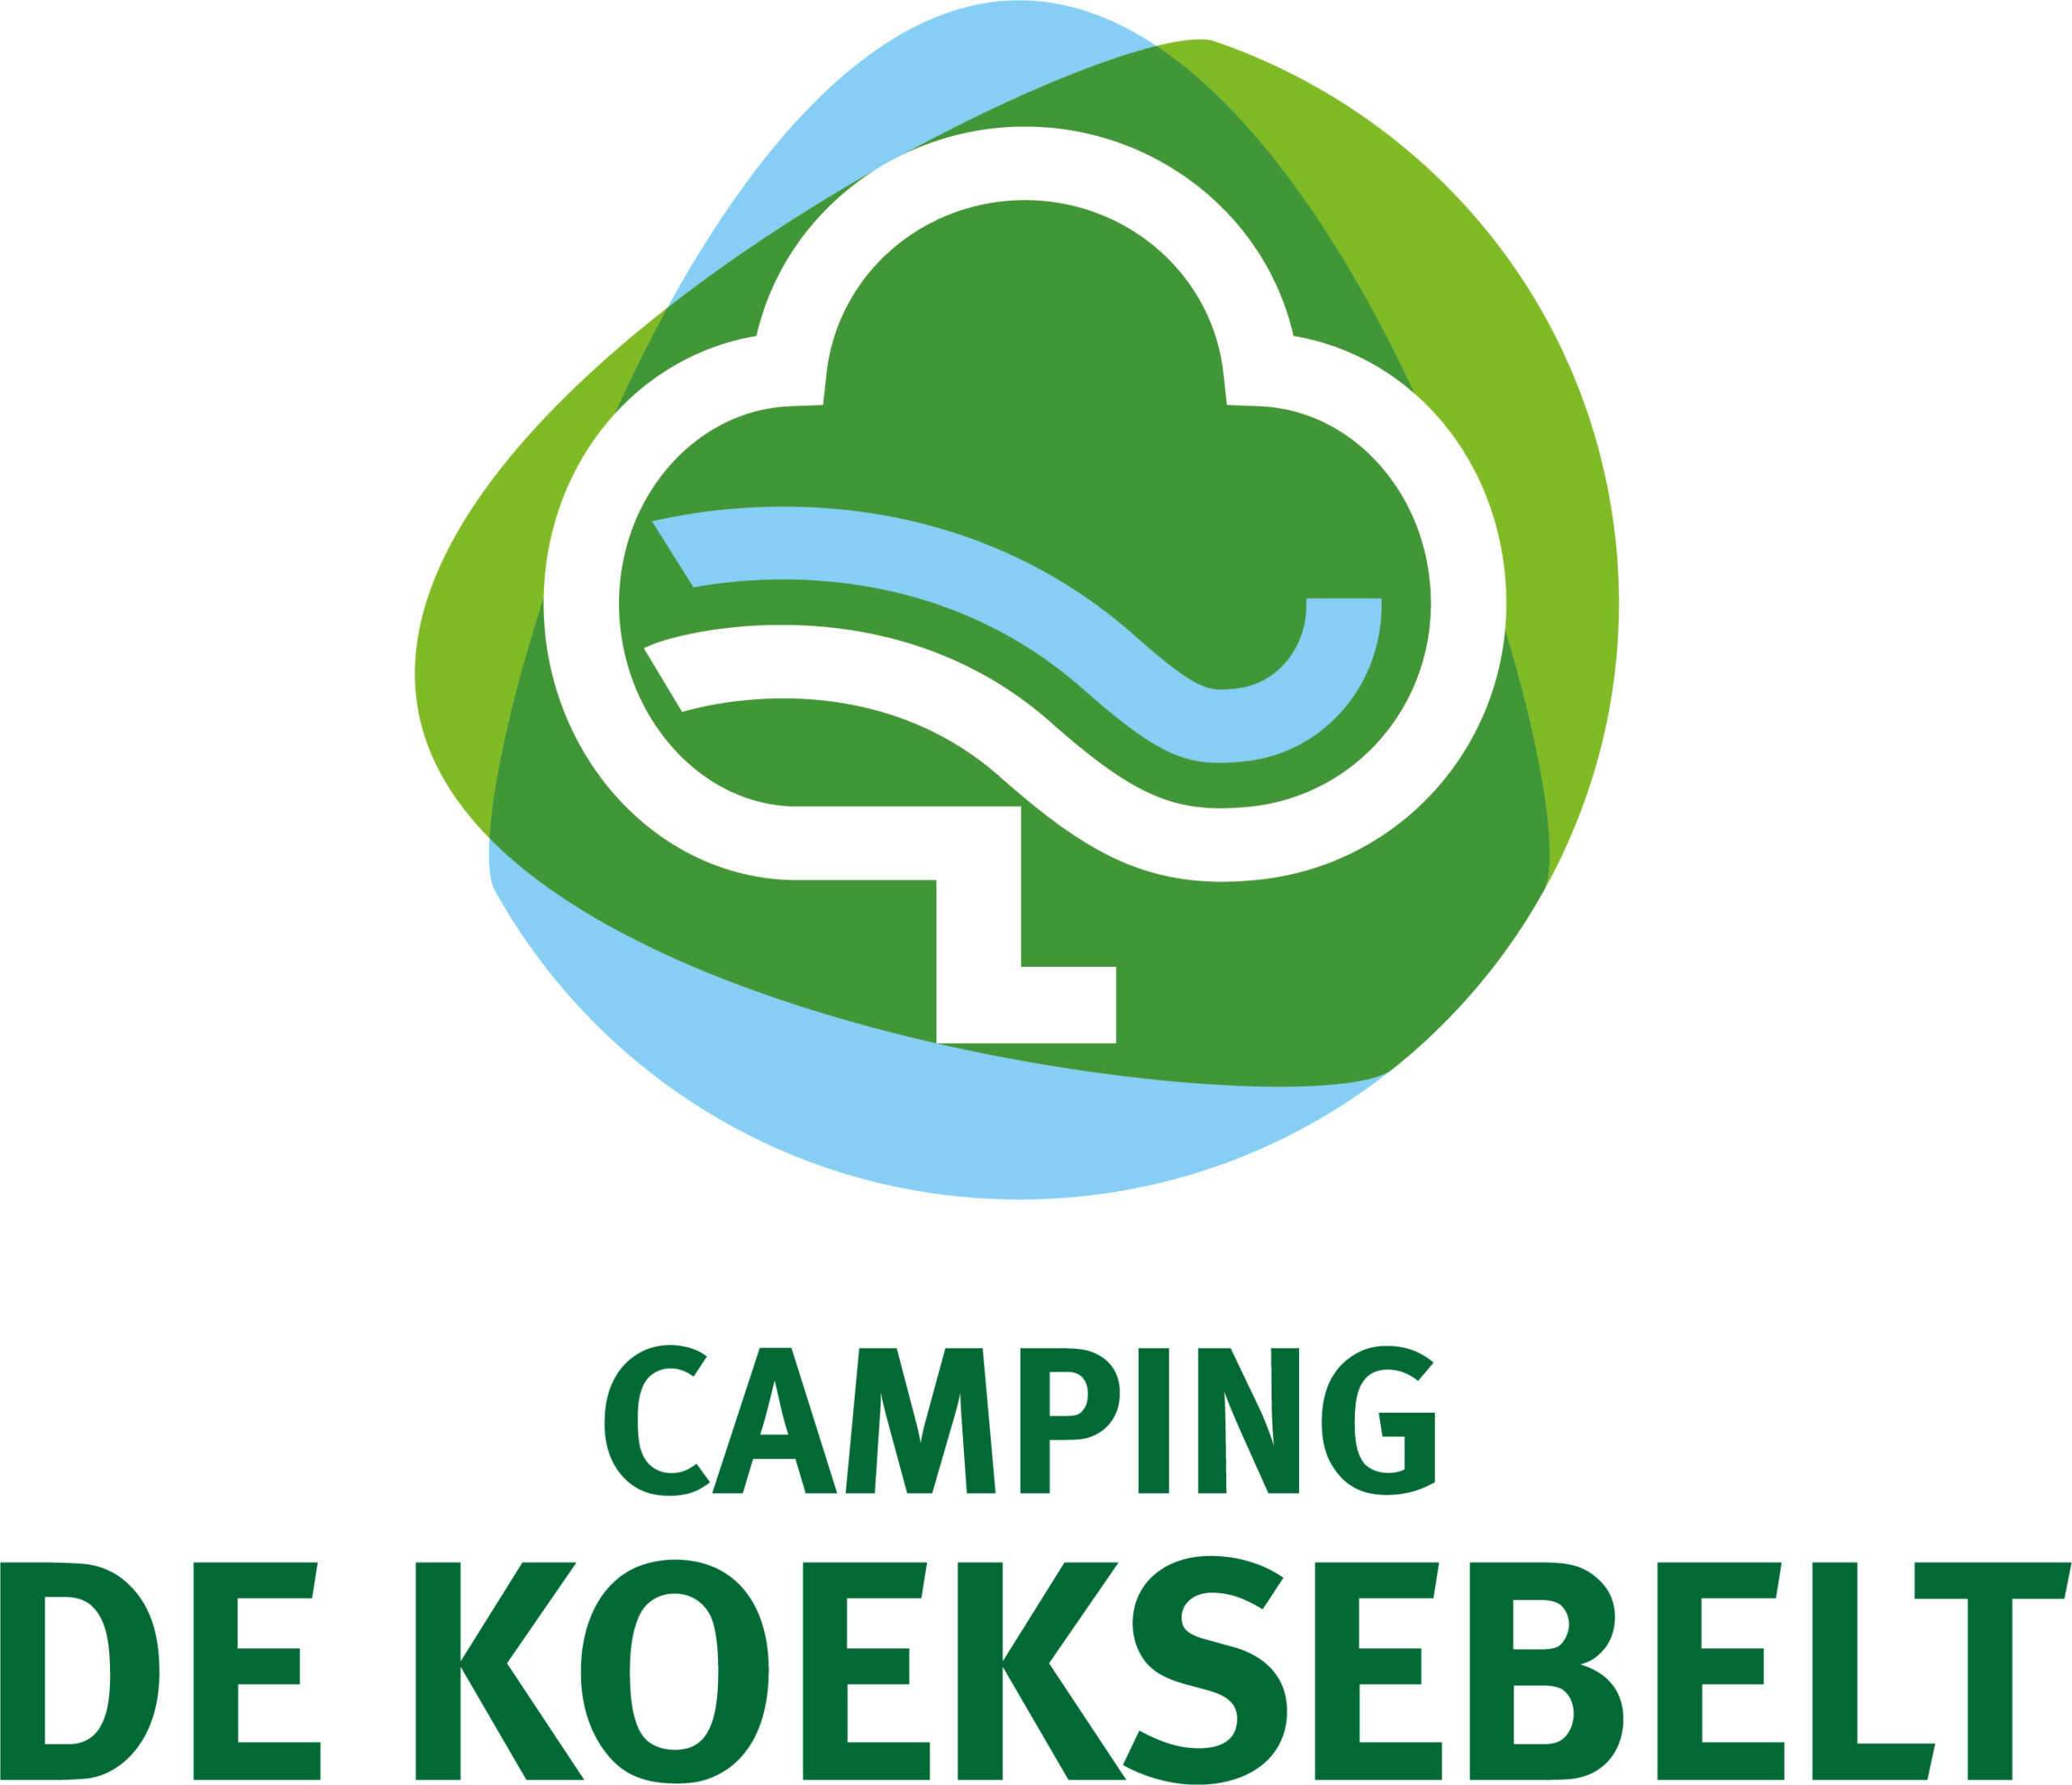 Camping de Koeksebelt